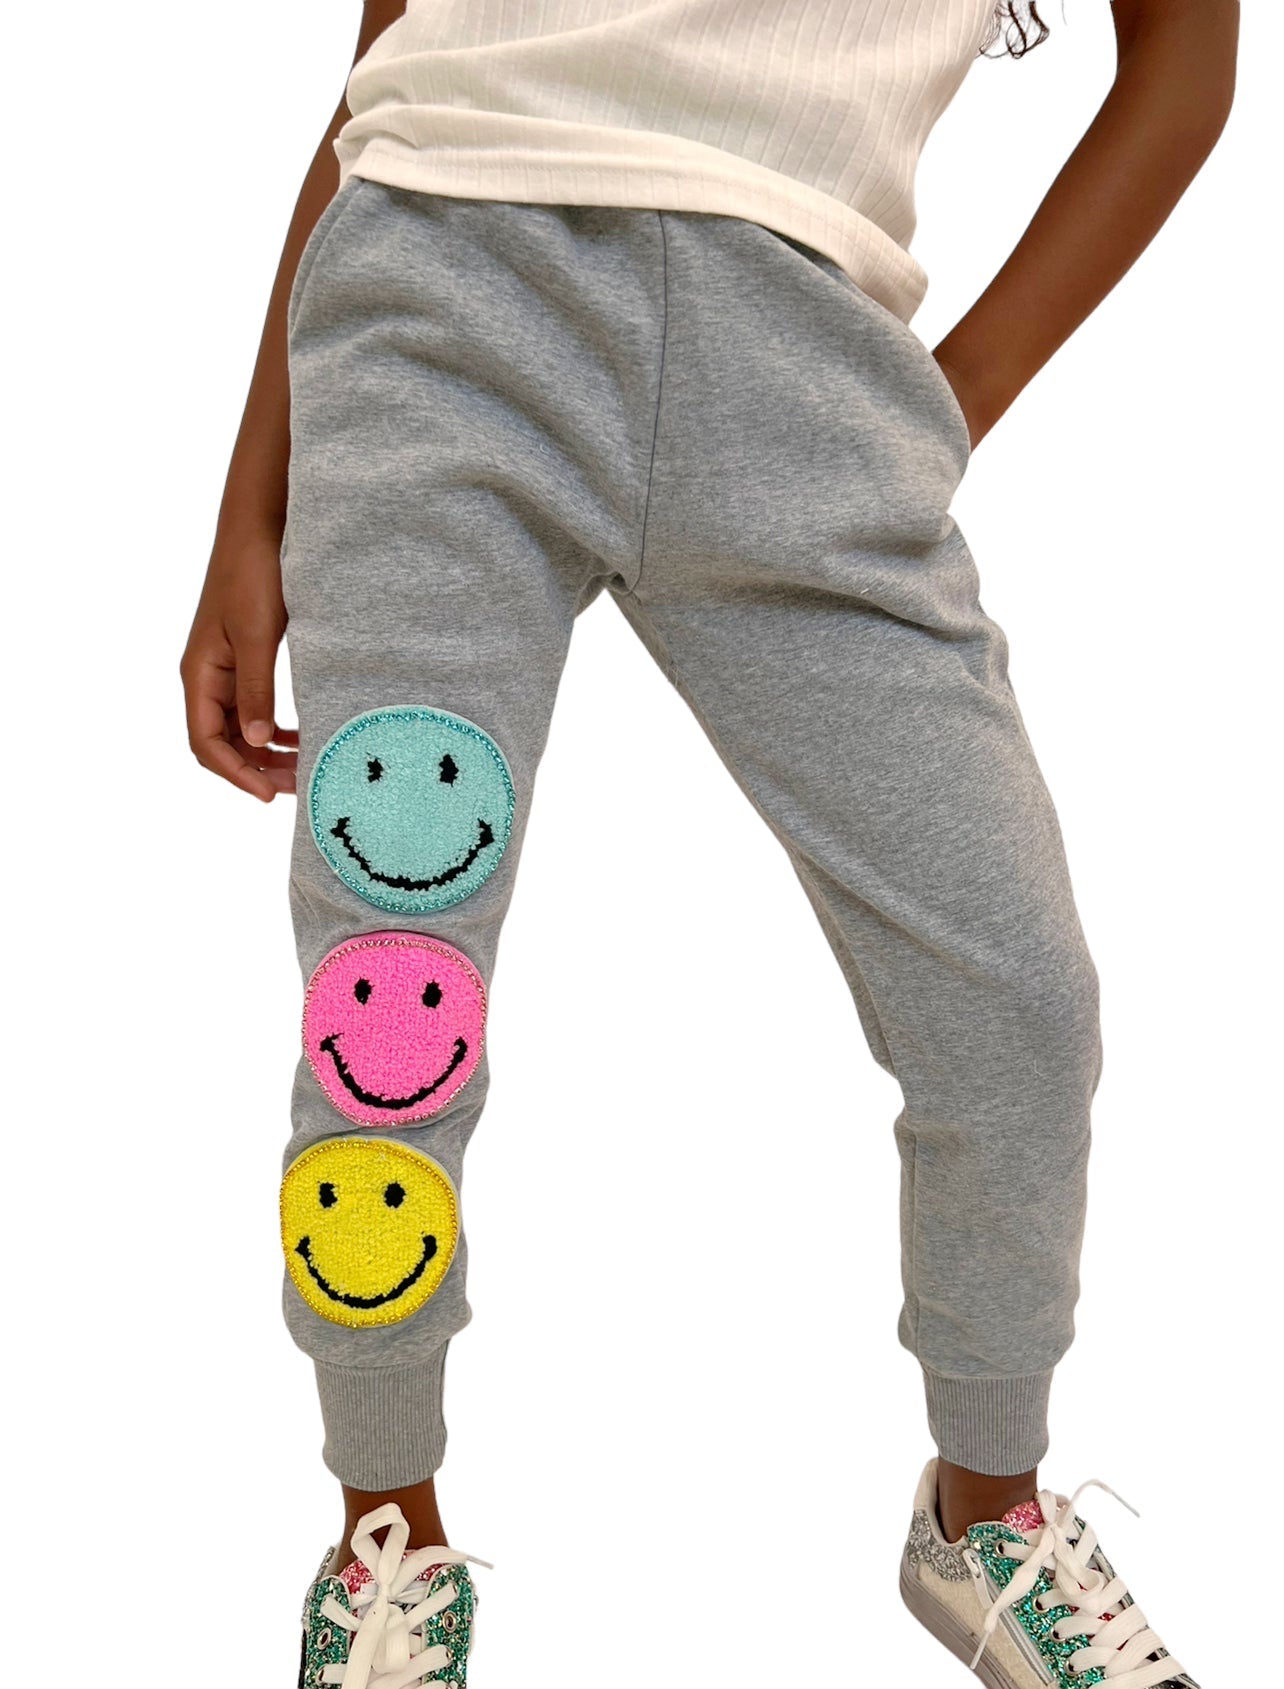 Smiley Graphic Sweatpants – Brave the Label